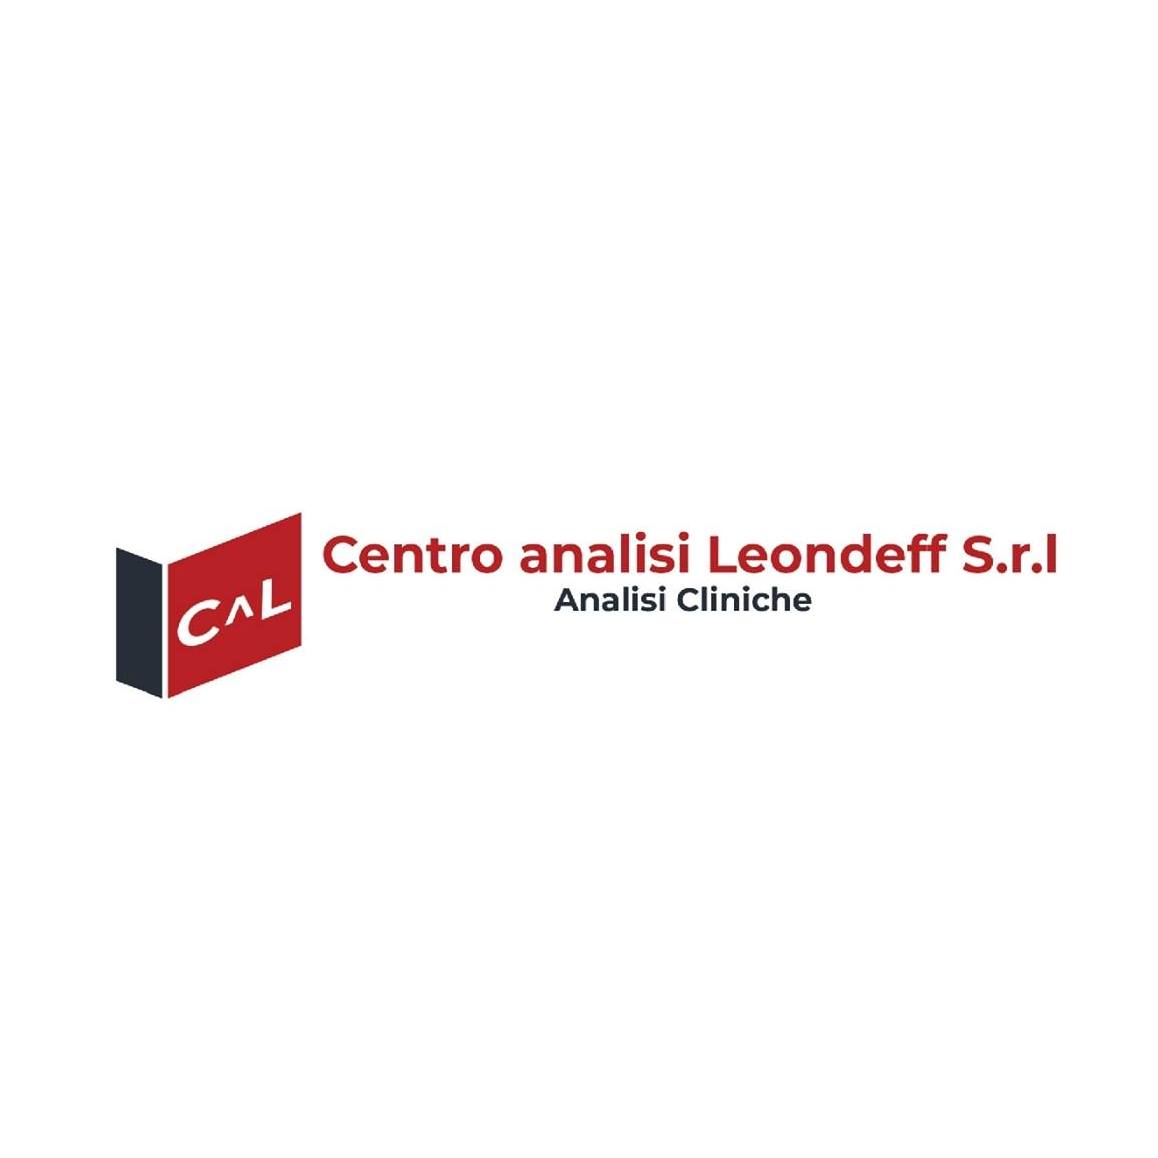 Centro analisi Leondeff